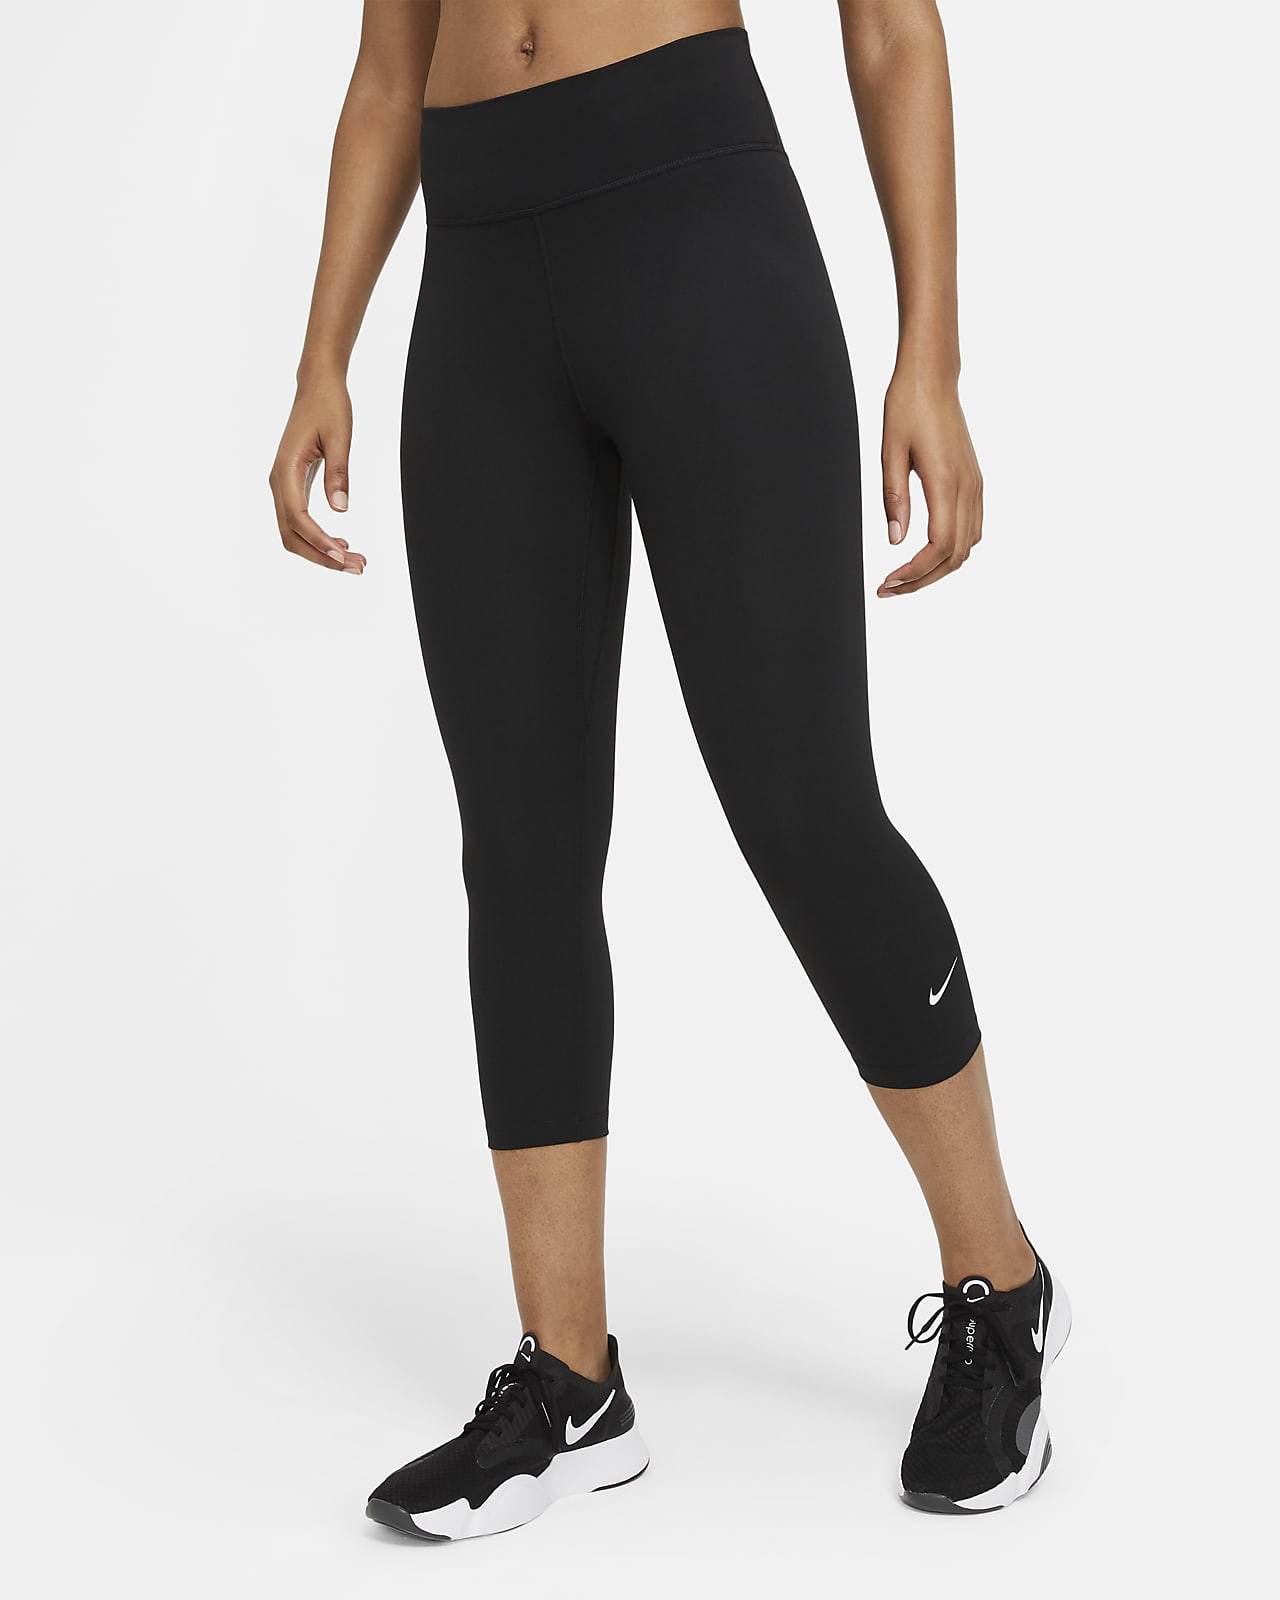 Nike One-capri-leggings med mellemhøj talje til kvinder